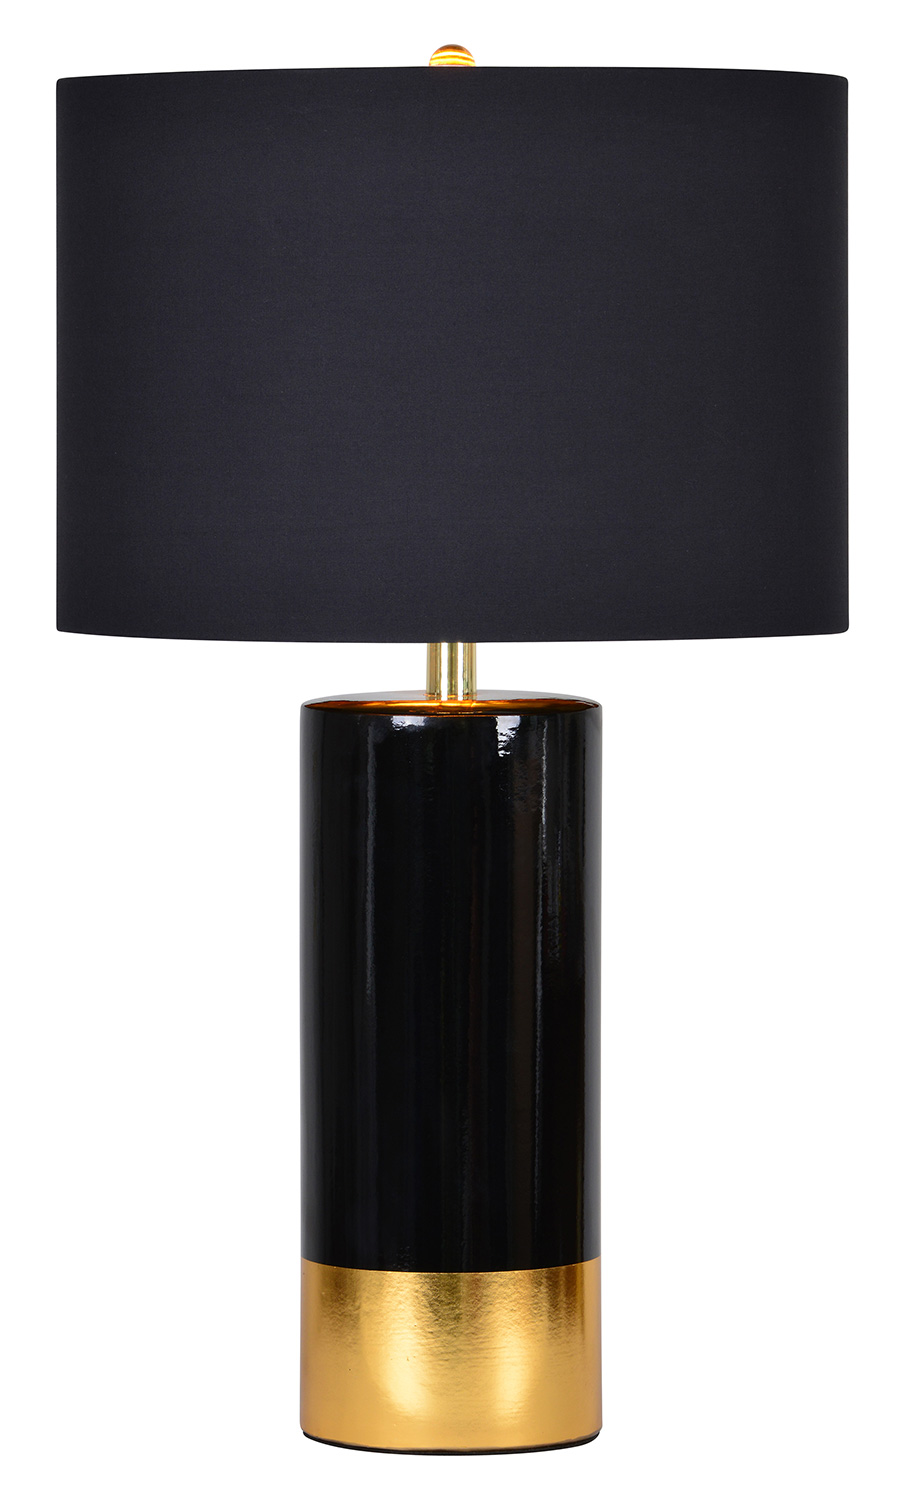 Ren-Wil The Tuxedo Table Lamp - Black/Gold